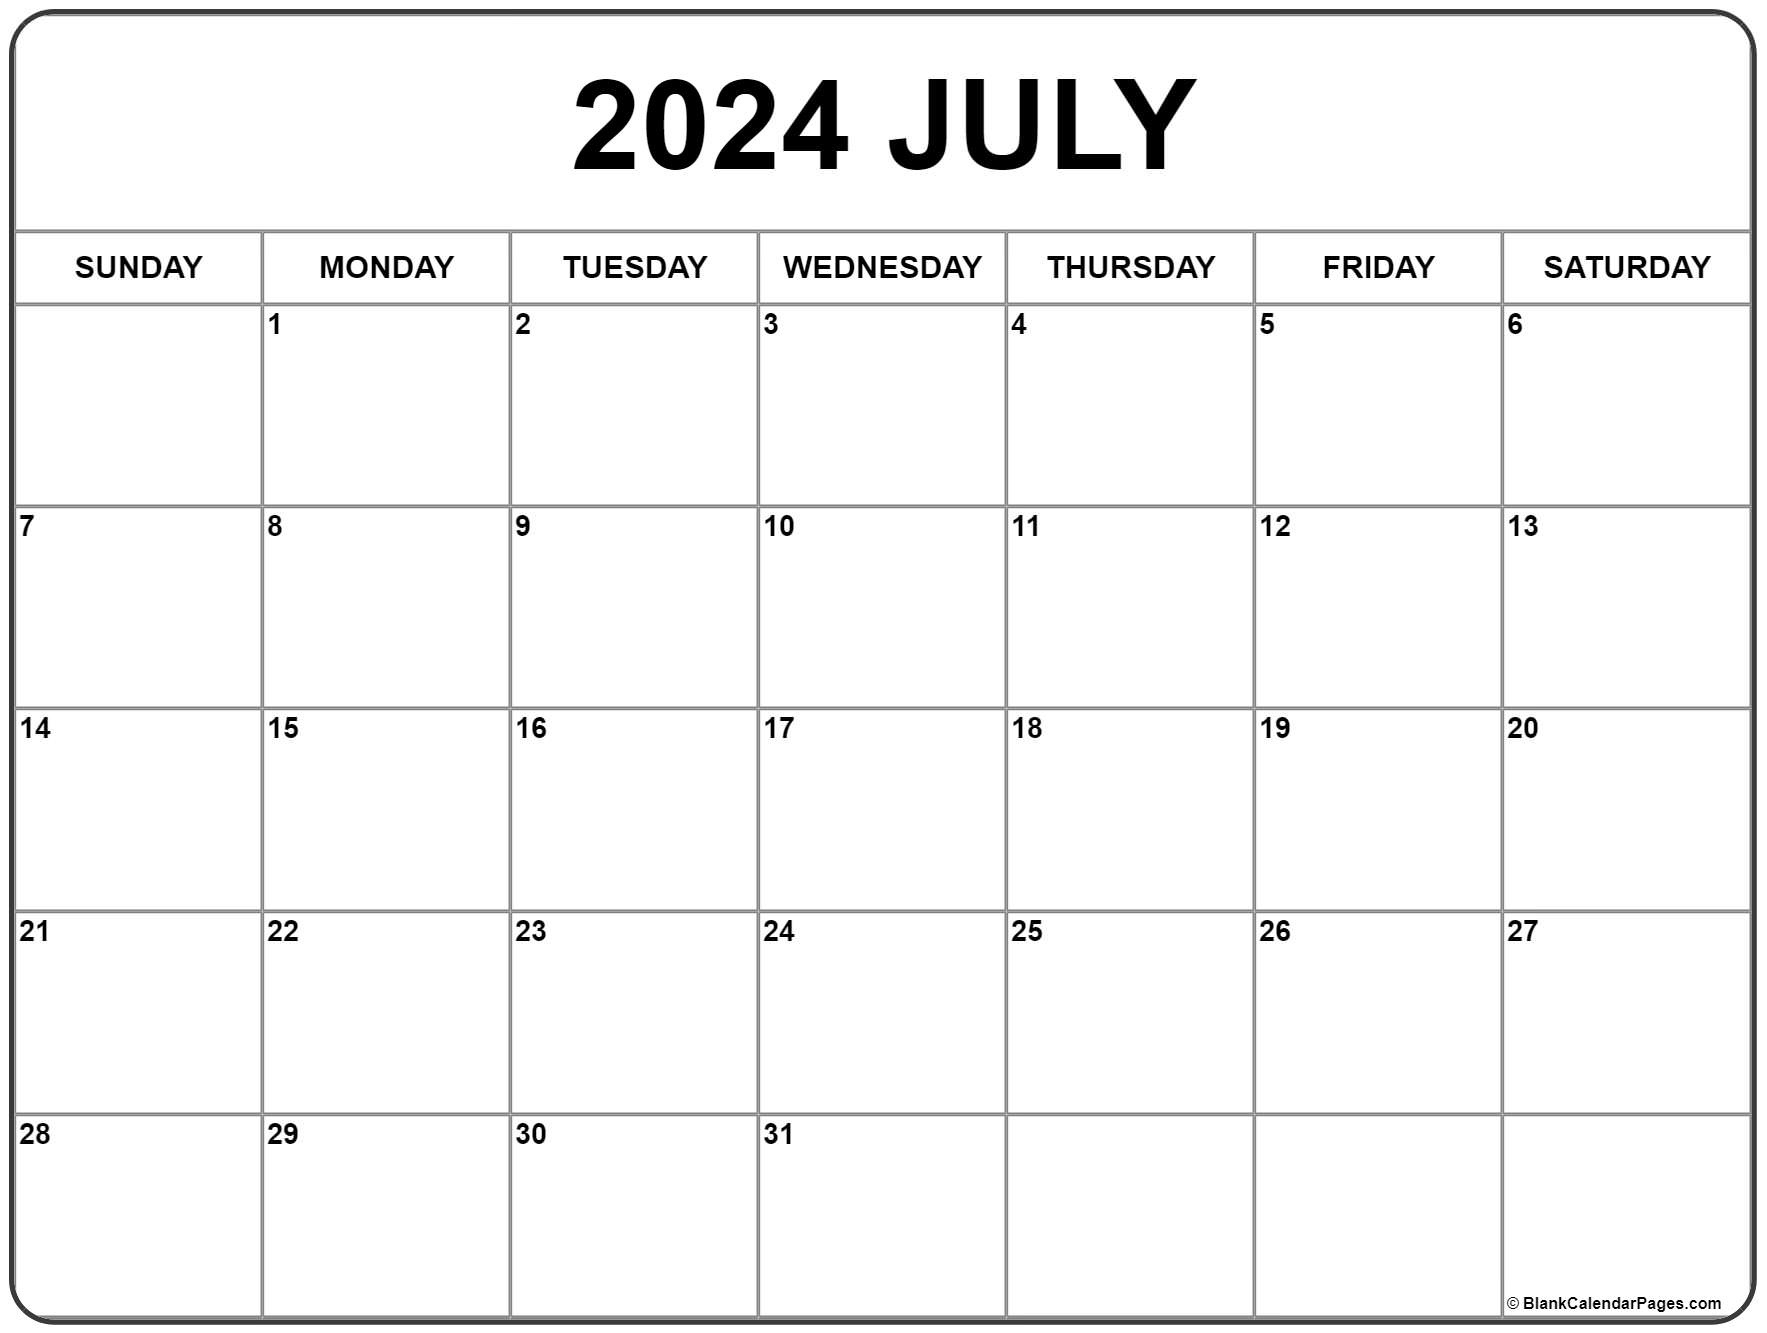 July 2024 Calendar | Free Printable Calendar within July 2024 Calendar Printable Free